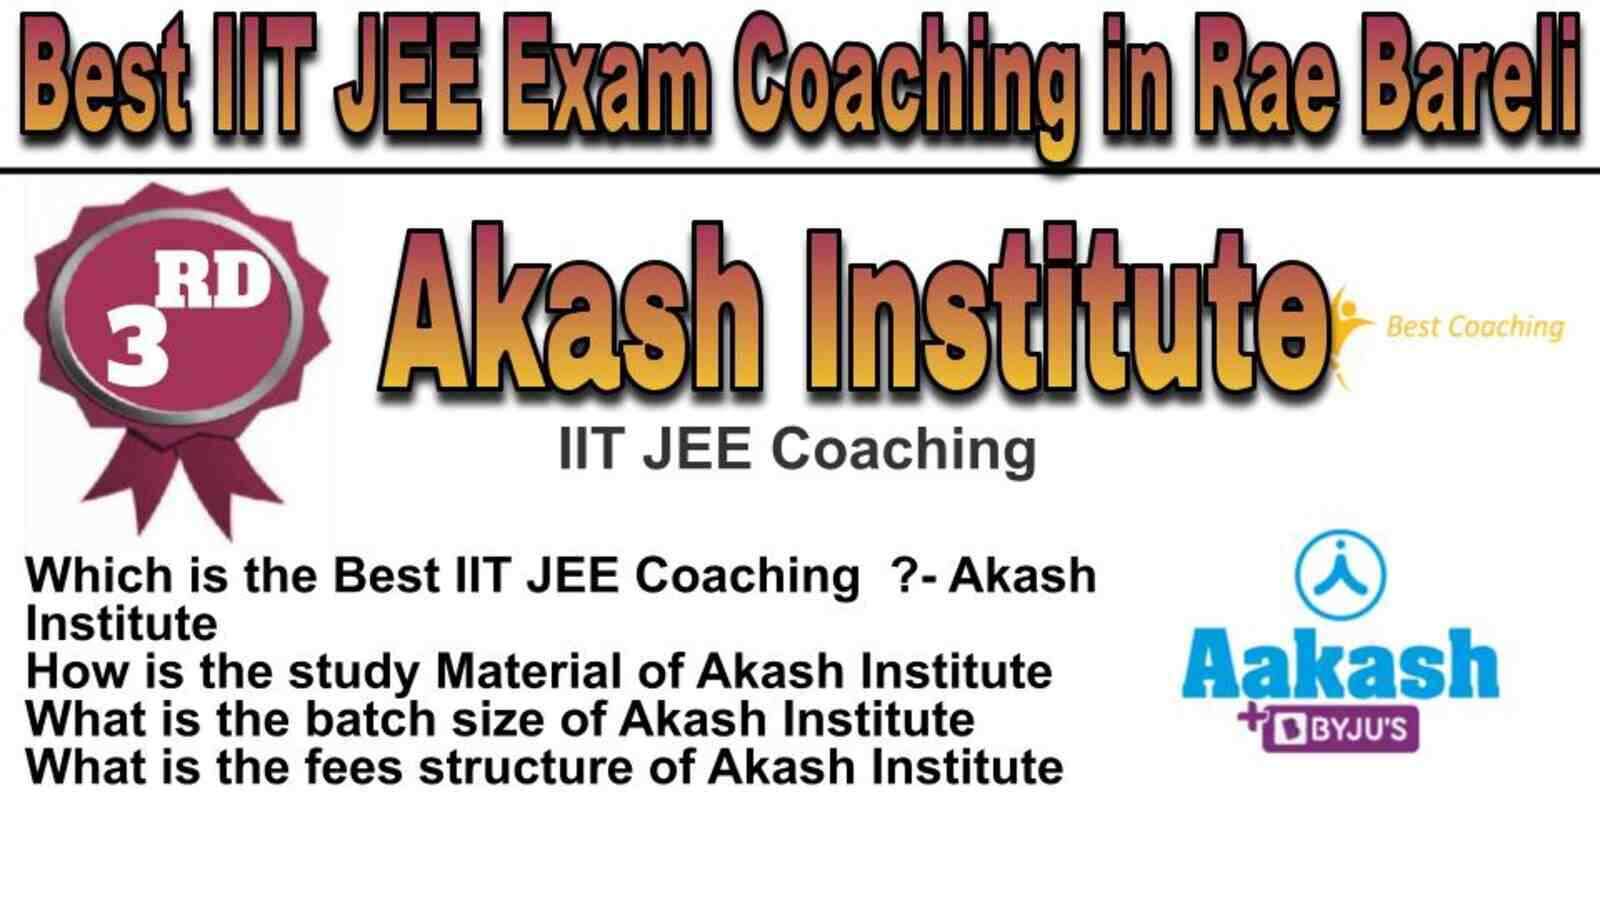 Rank 3 Best IIT JEE Coaching in Raebareli